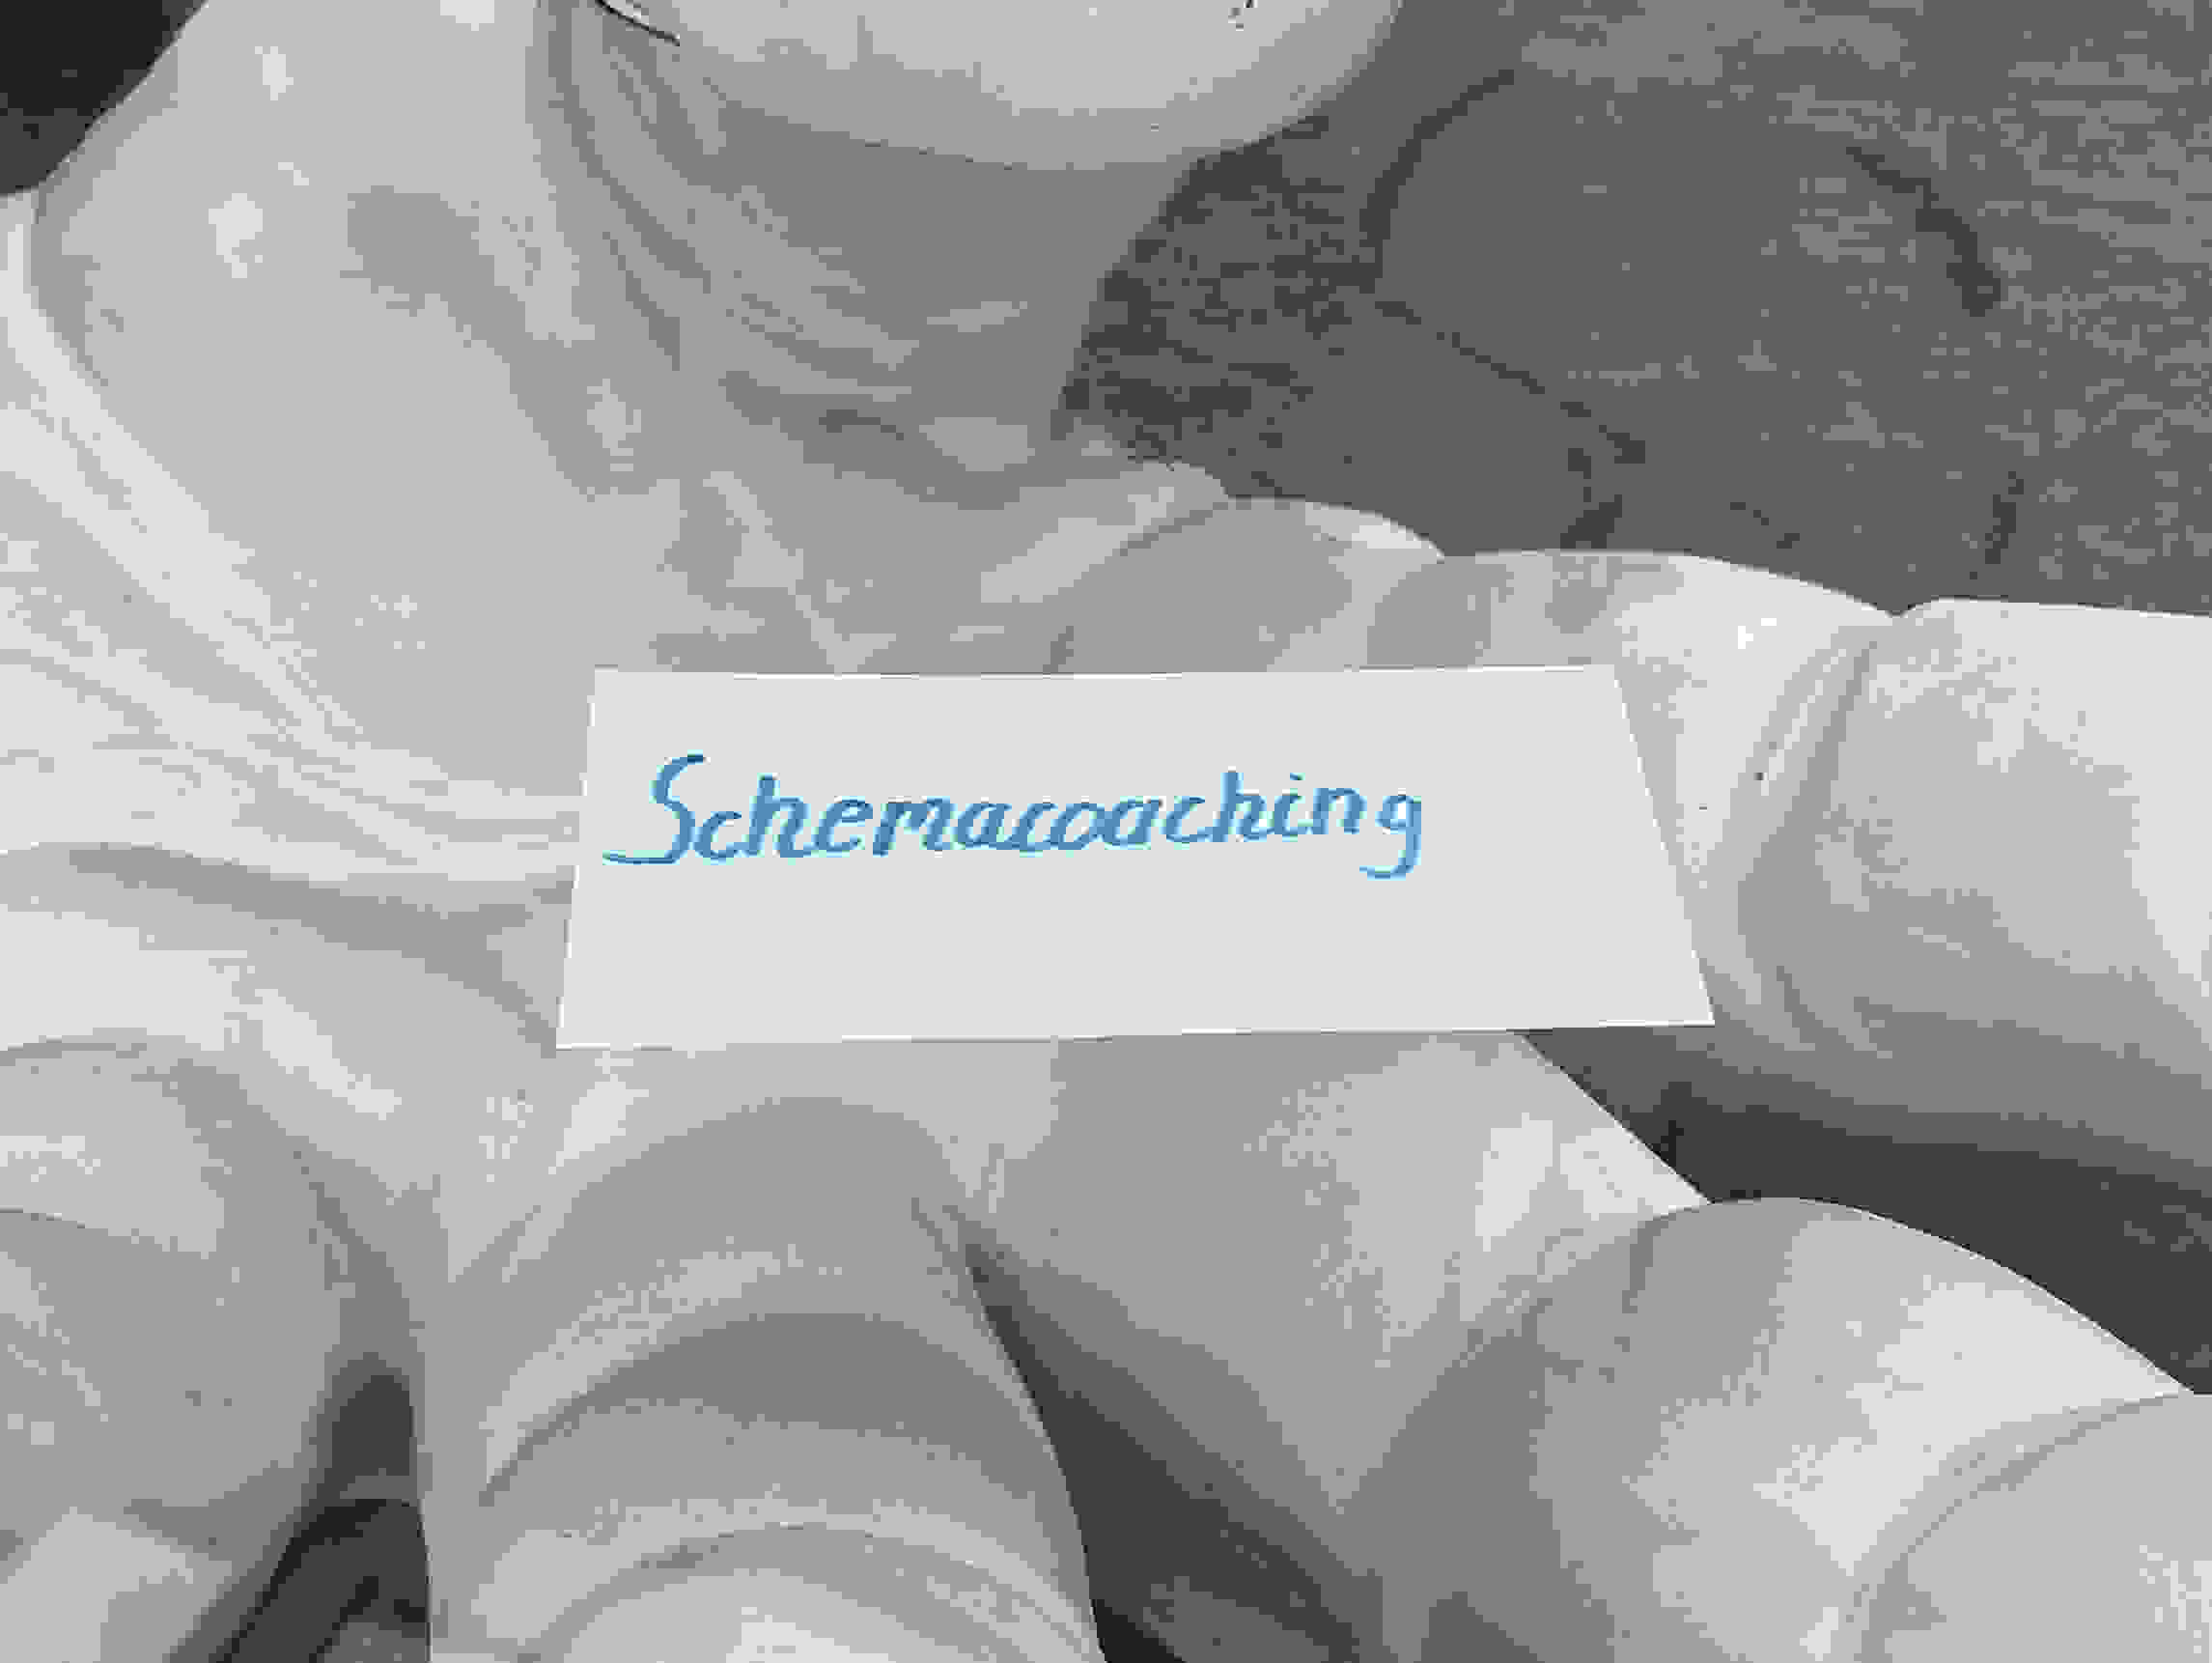 Schemacoaching